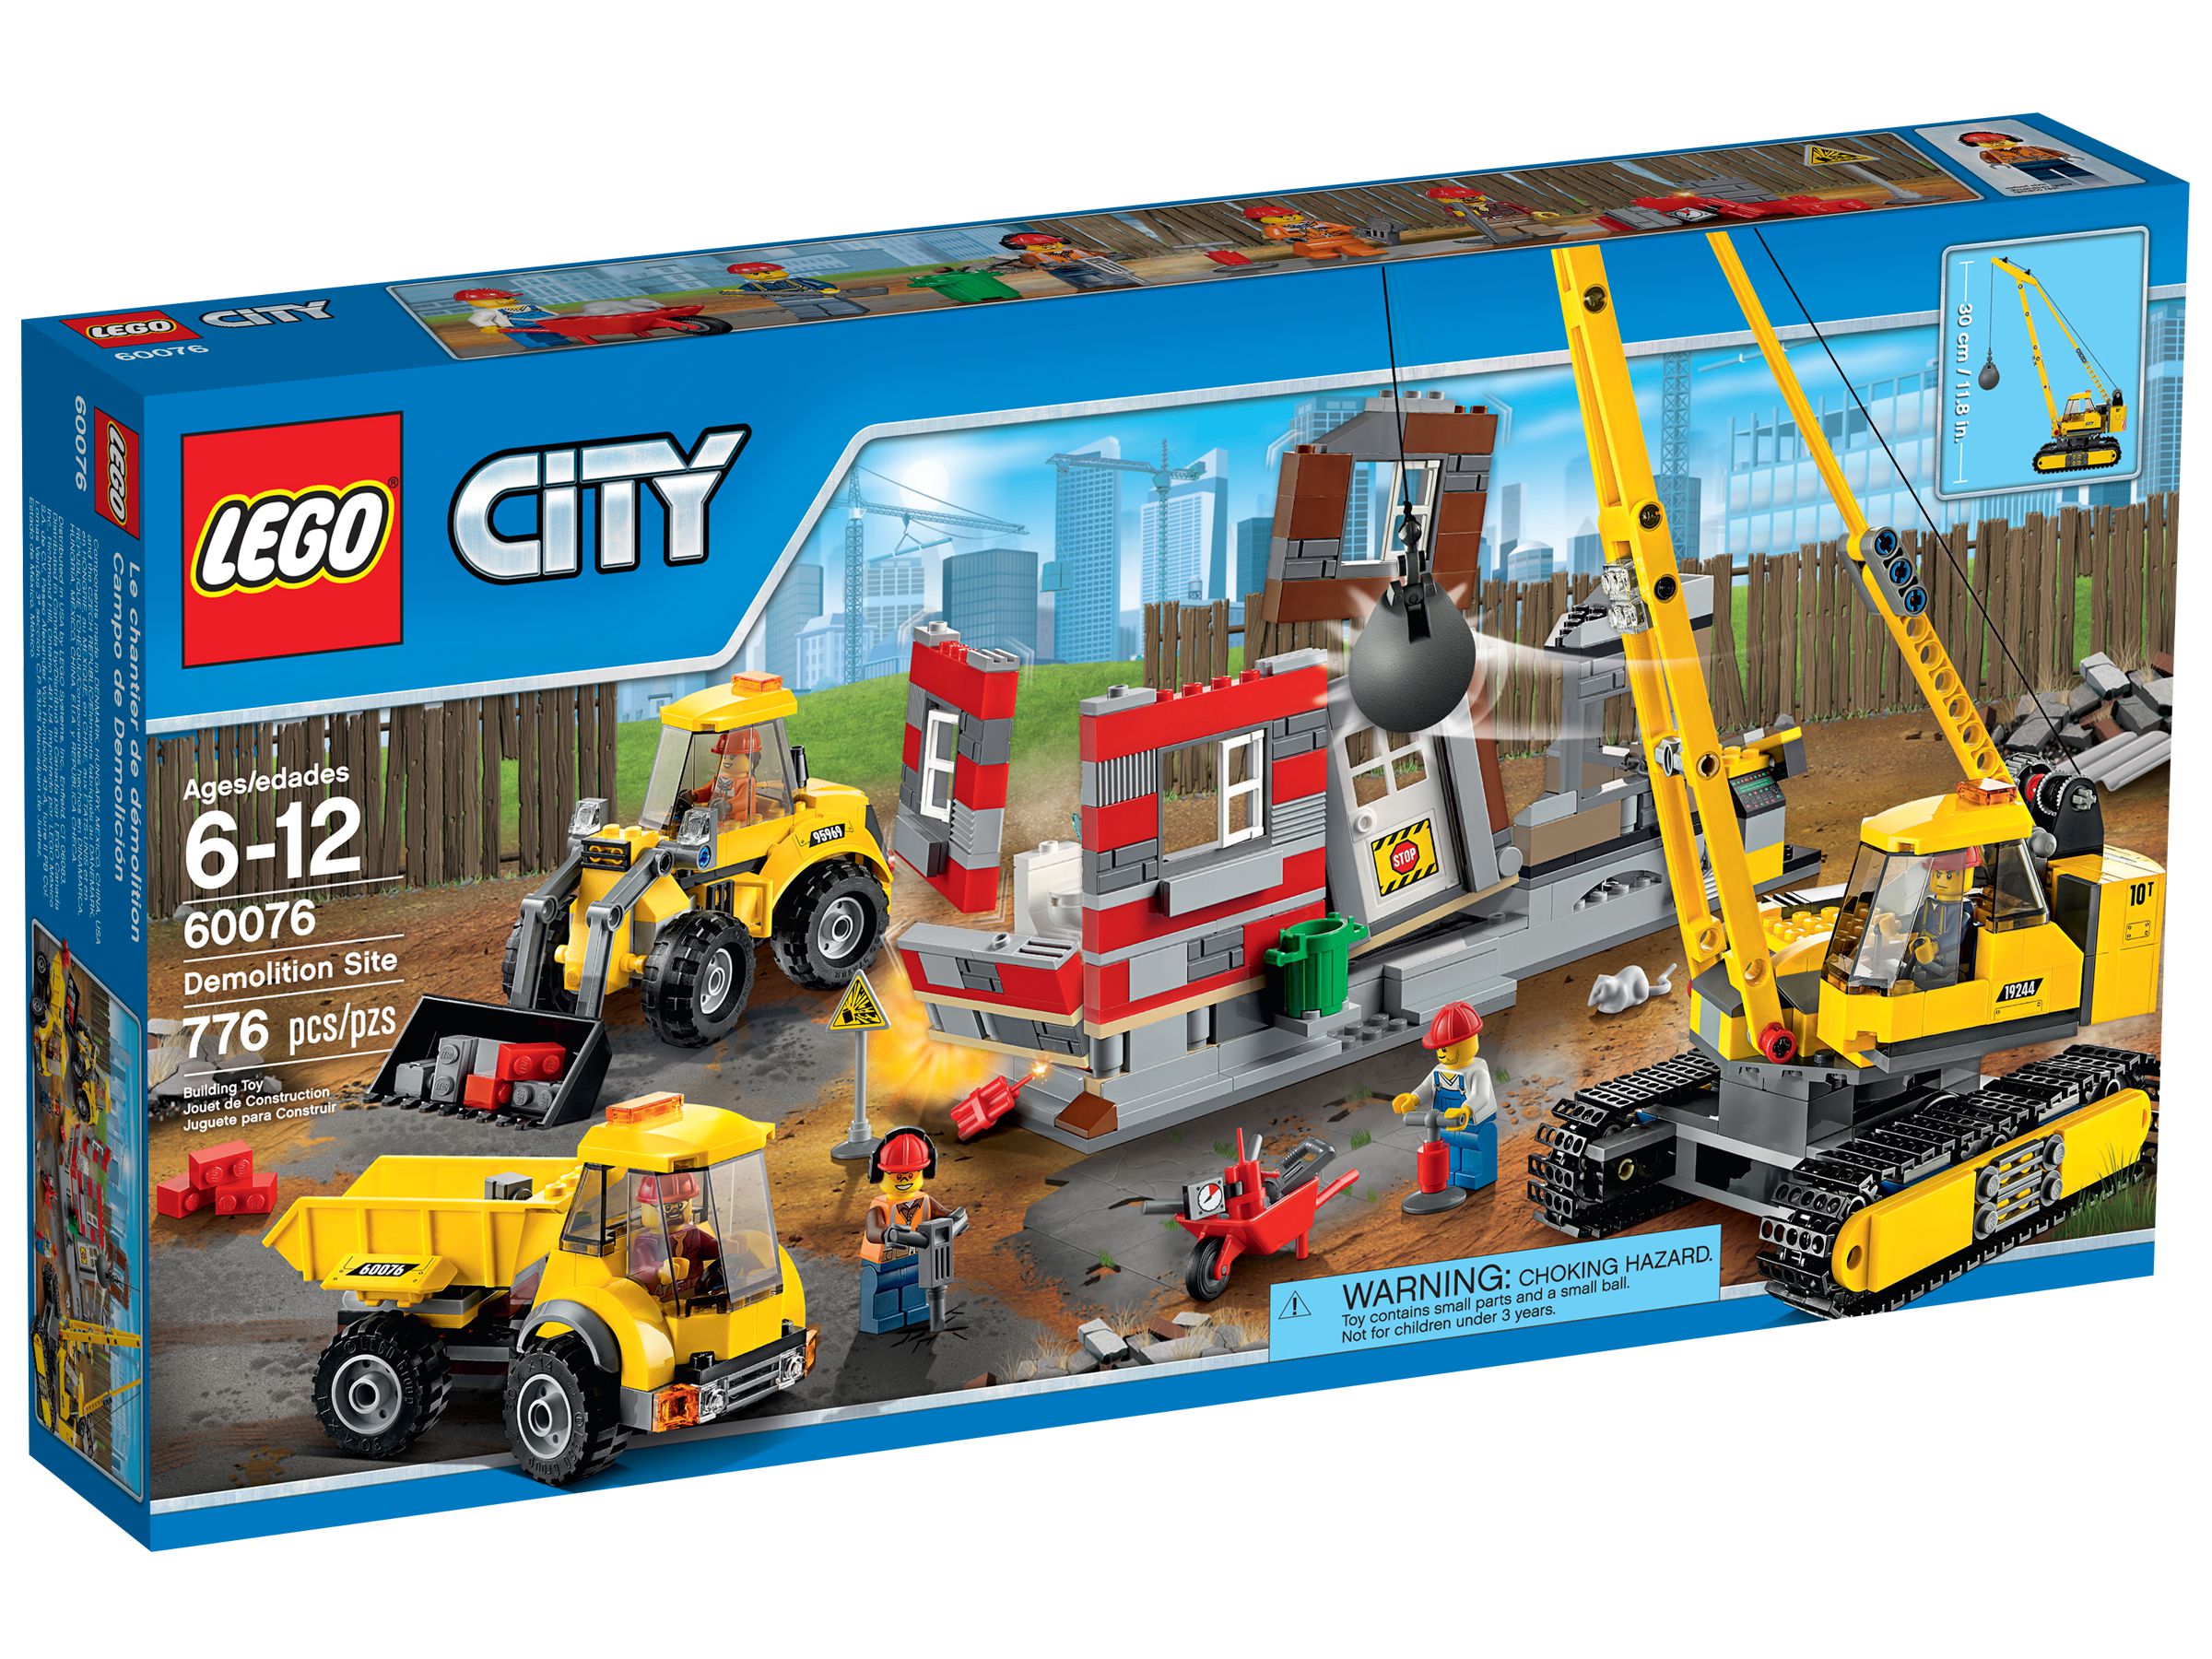 LEGO City 60076 Abriss-Baustelle LEGO_60076_alt1.jpg